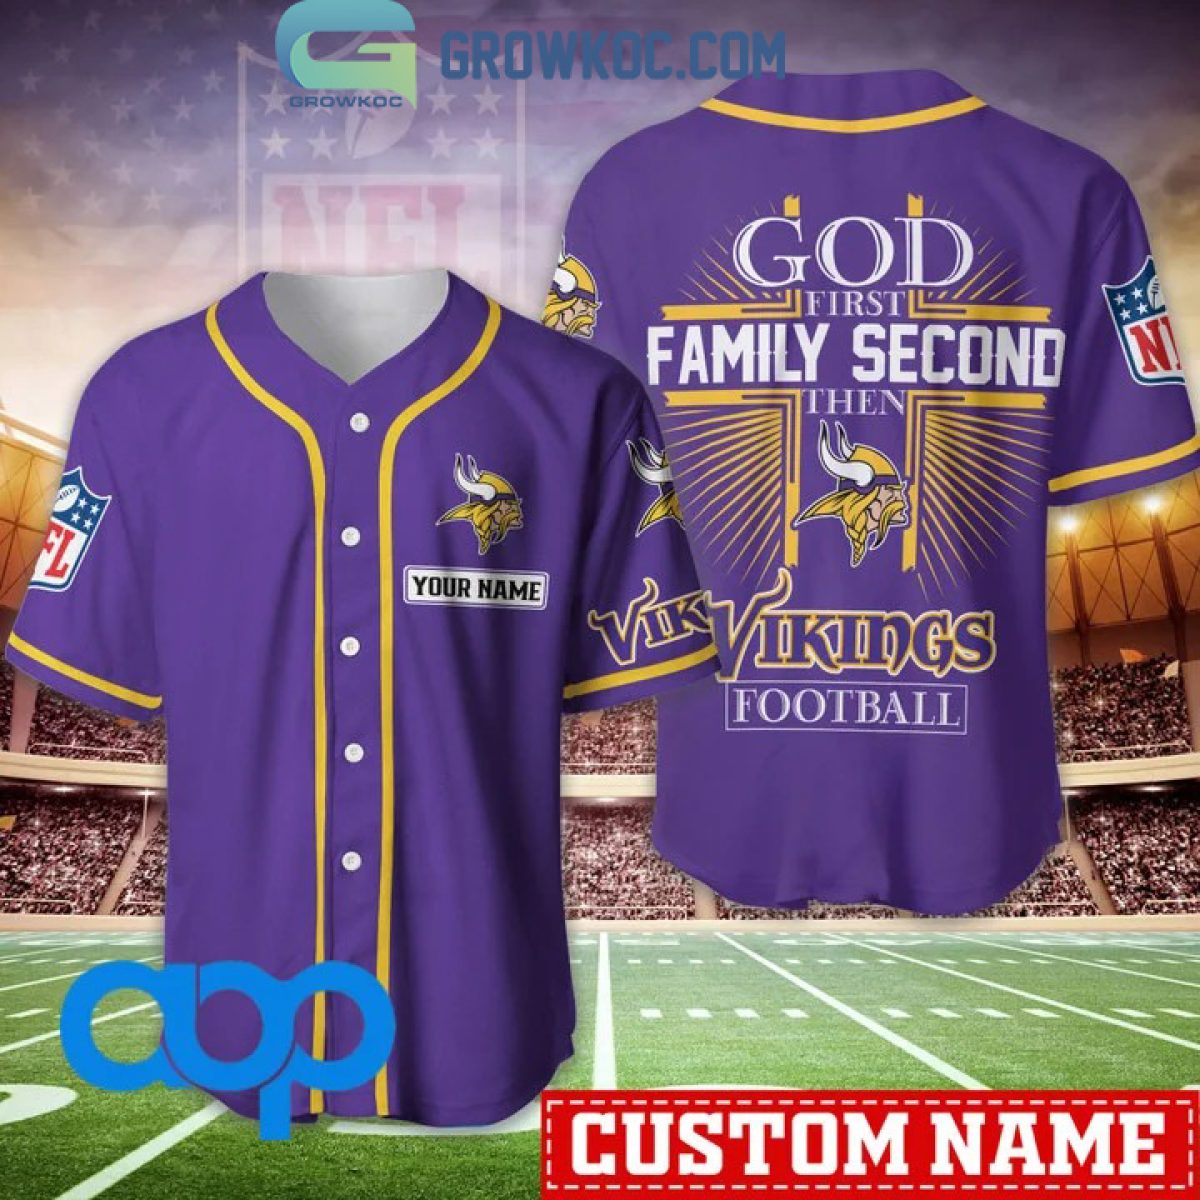 Las Vegas Raiders NFL Personalized God First Family Second Baseball Jersey  - Growkoc